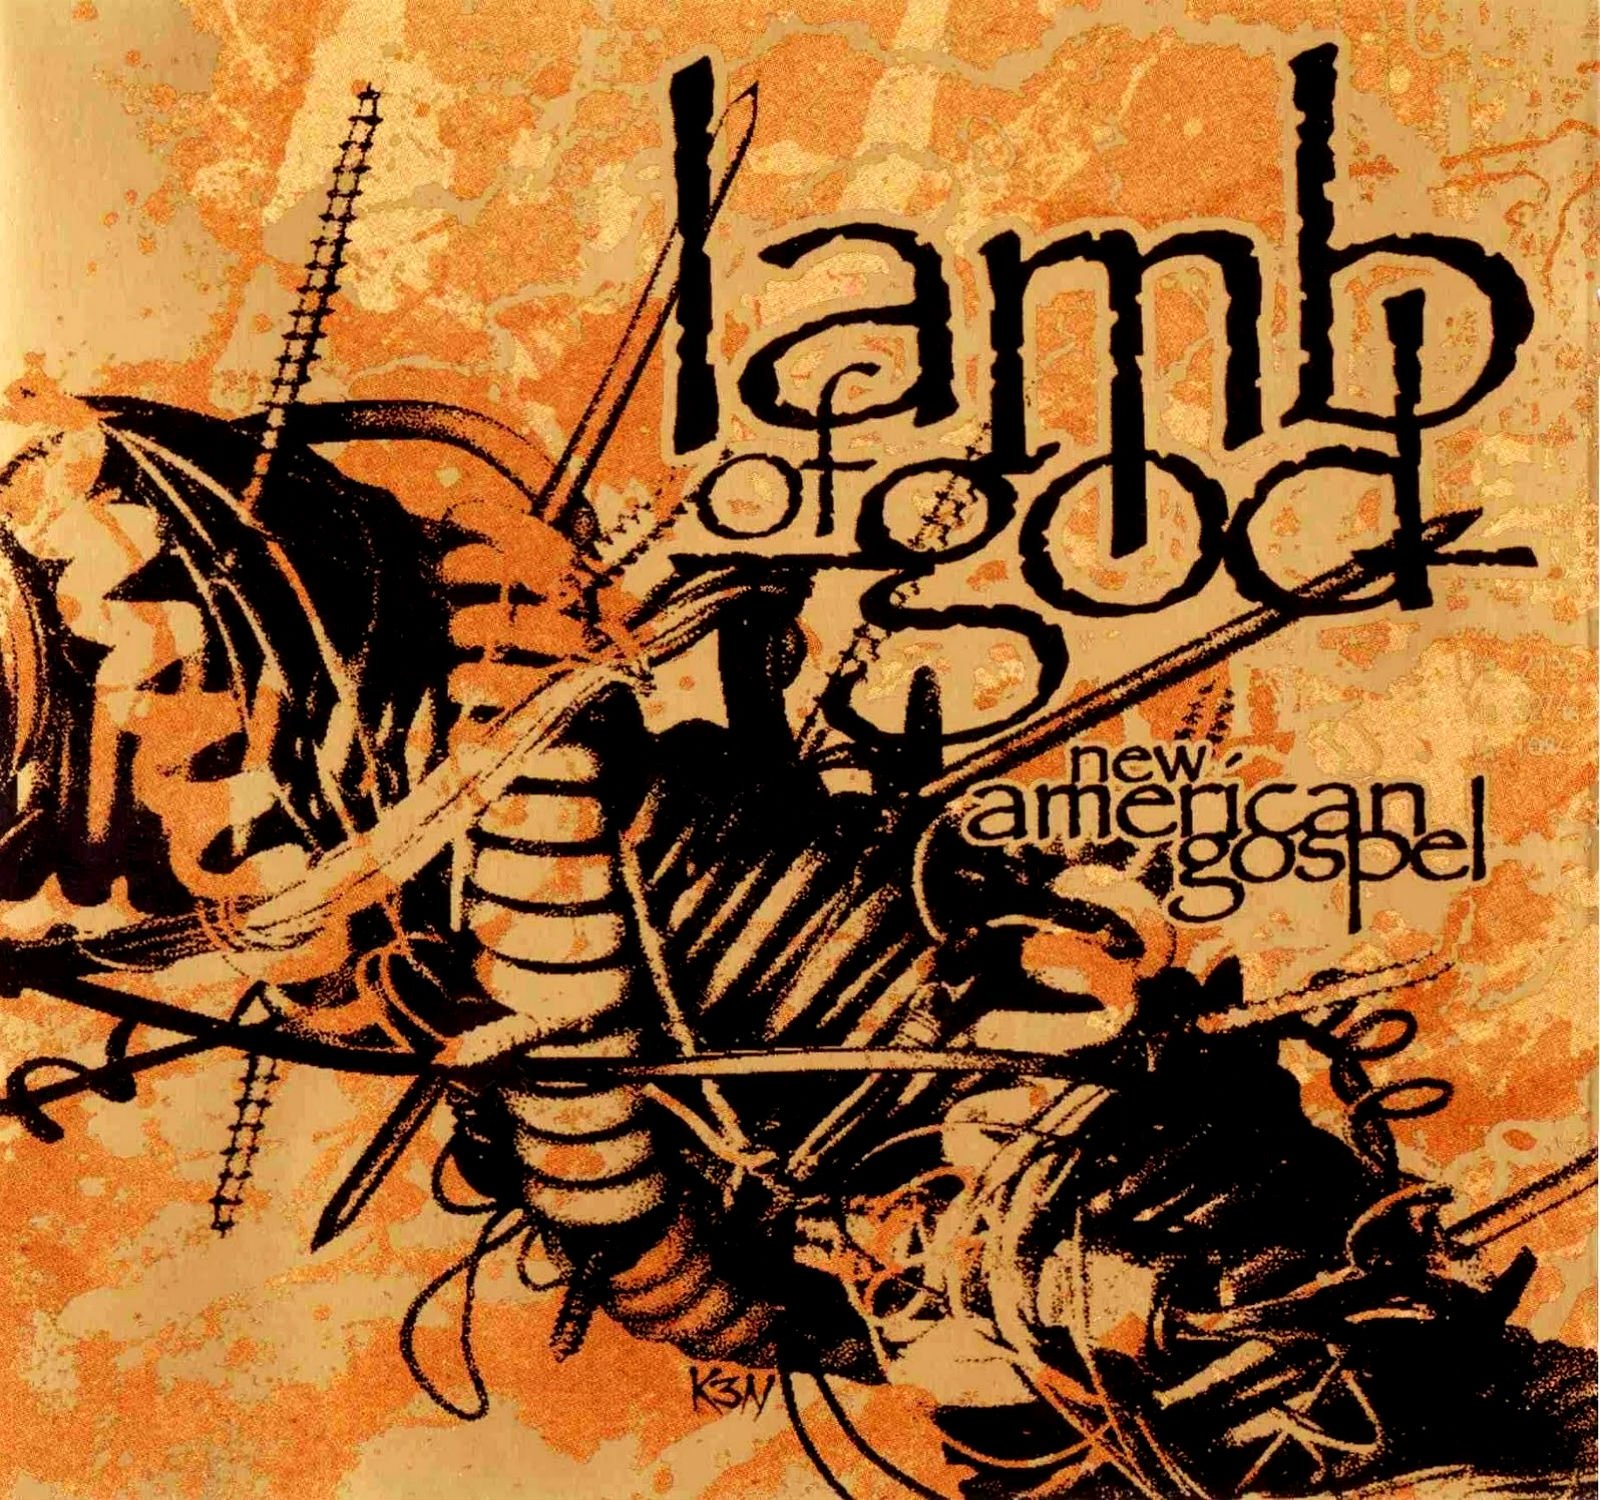 lamb, Of, God, Groove, Metal, Heavy, Poster Wallpaper